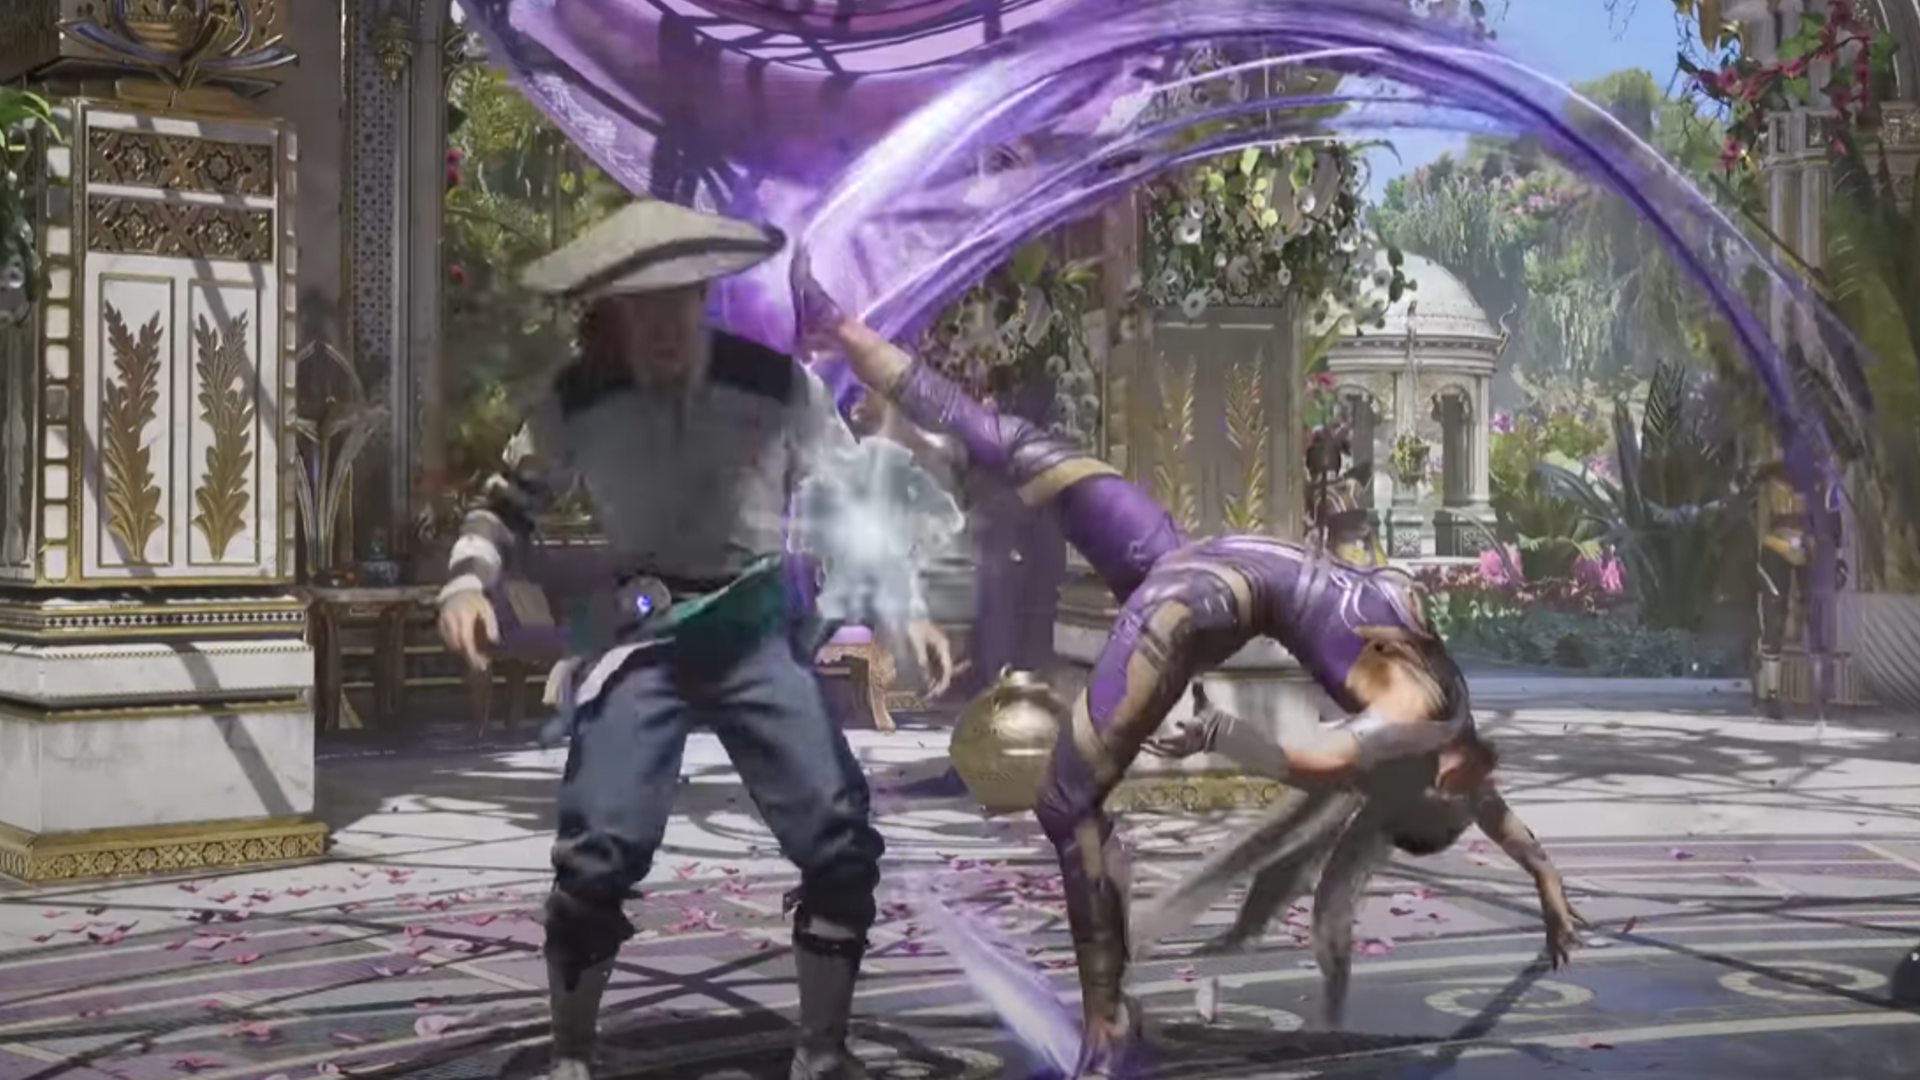 Mortal Kombat 1 characters: Sindel can be seen kicking someone